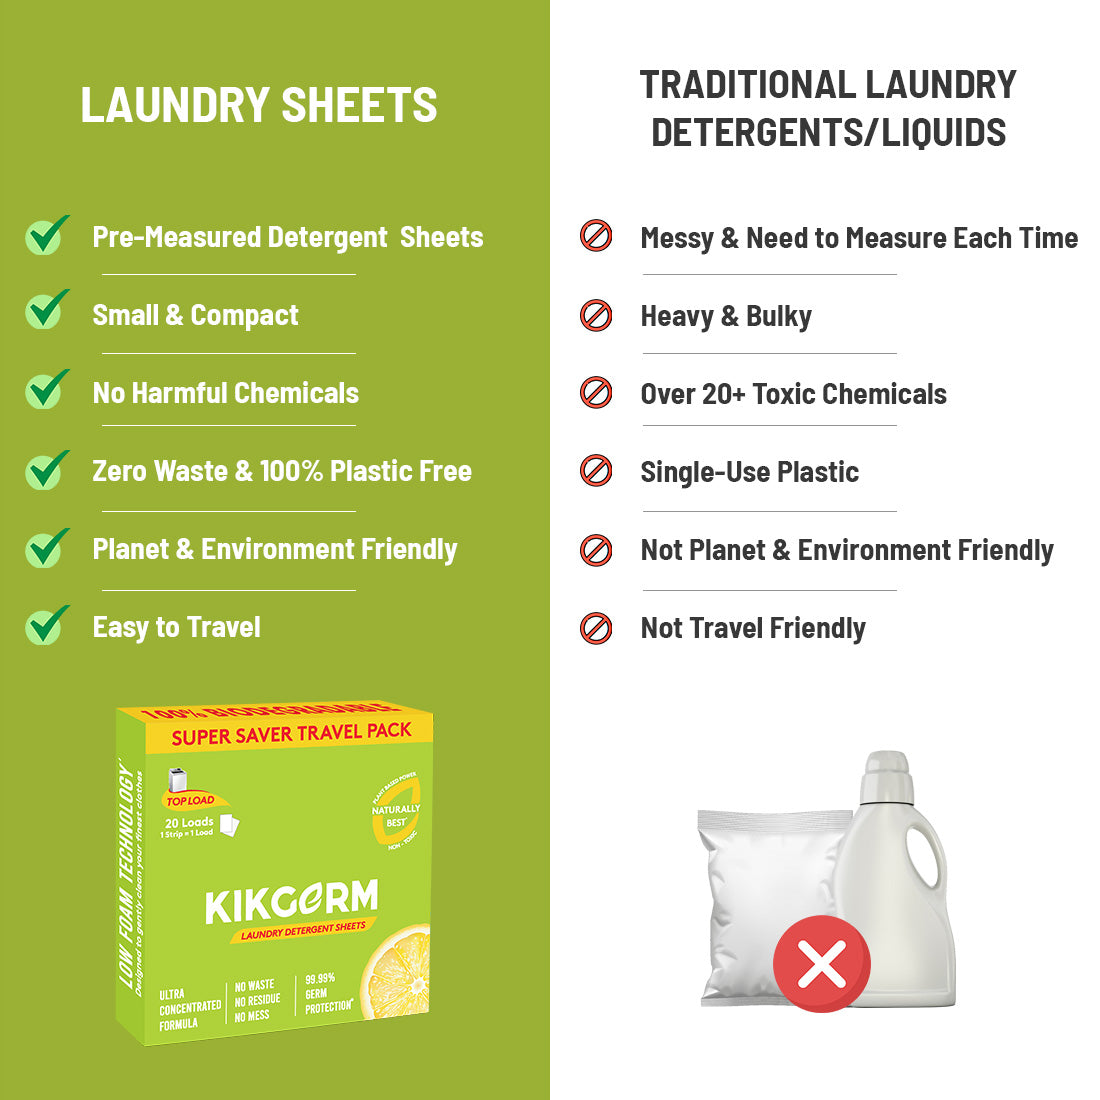 Top Load Laundry Sheet | 60 LOADS